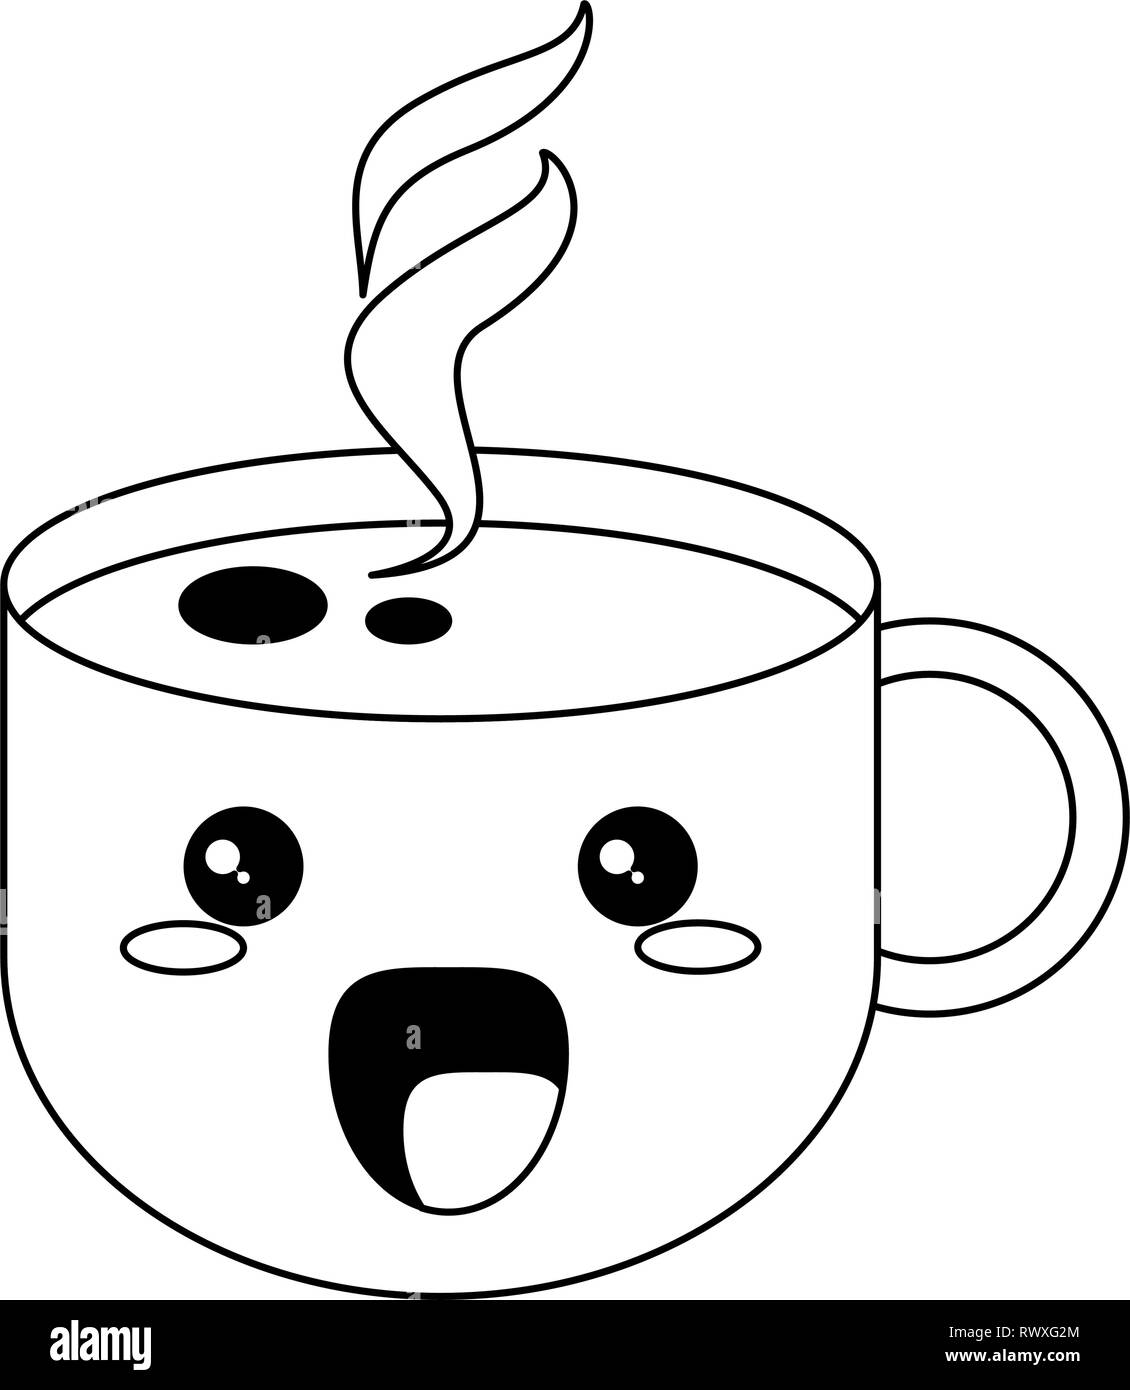 https://c8.alamy.com/comp/RWXG2M/hot-coffee-cup-symbol-kawaii-cartoon-in-black-and-white-RWXG2M.jpg